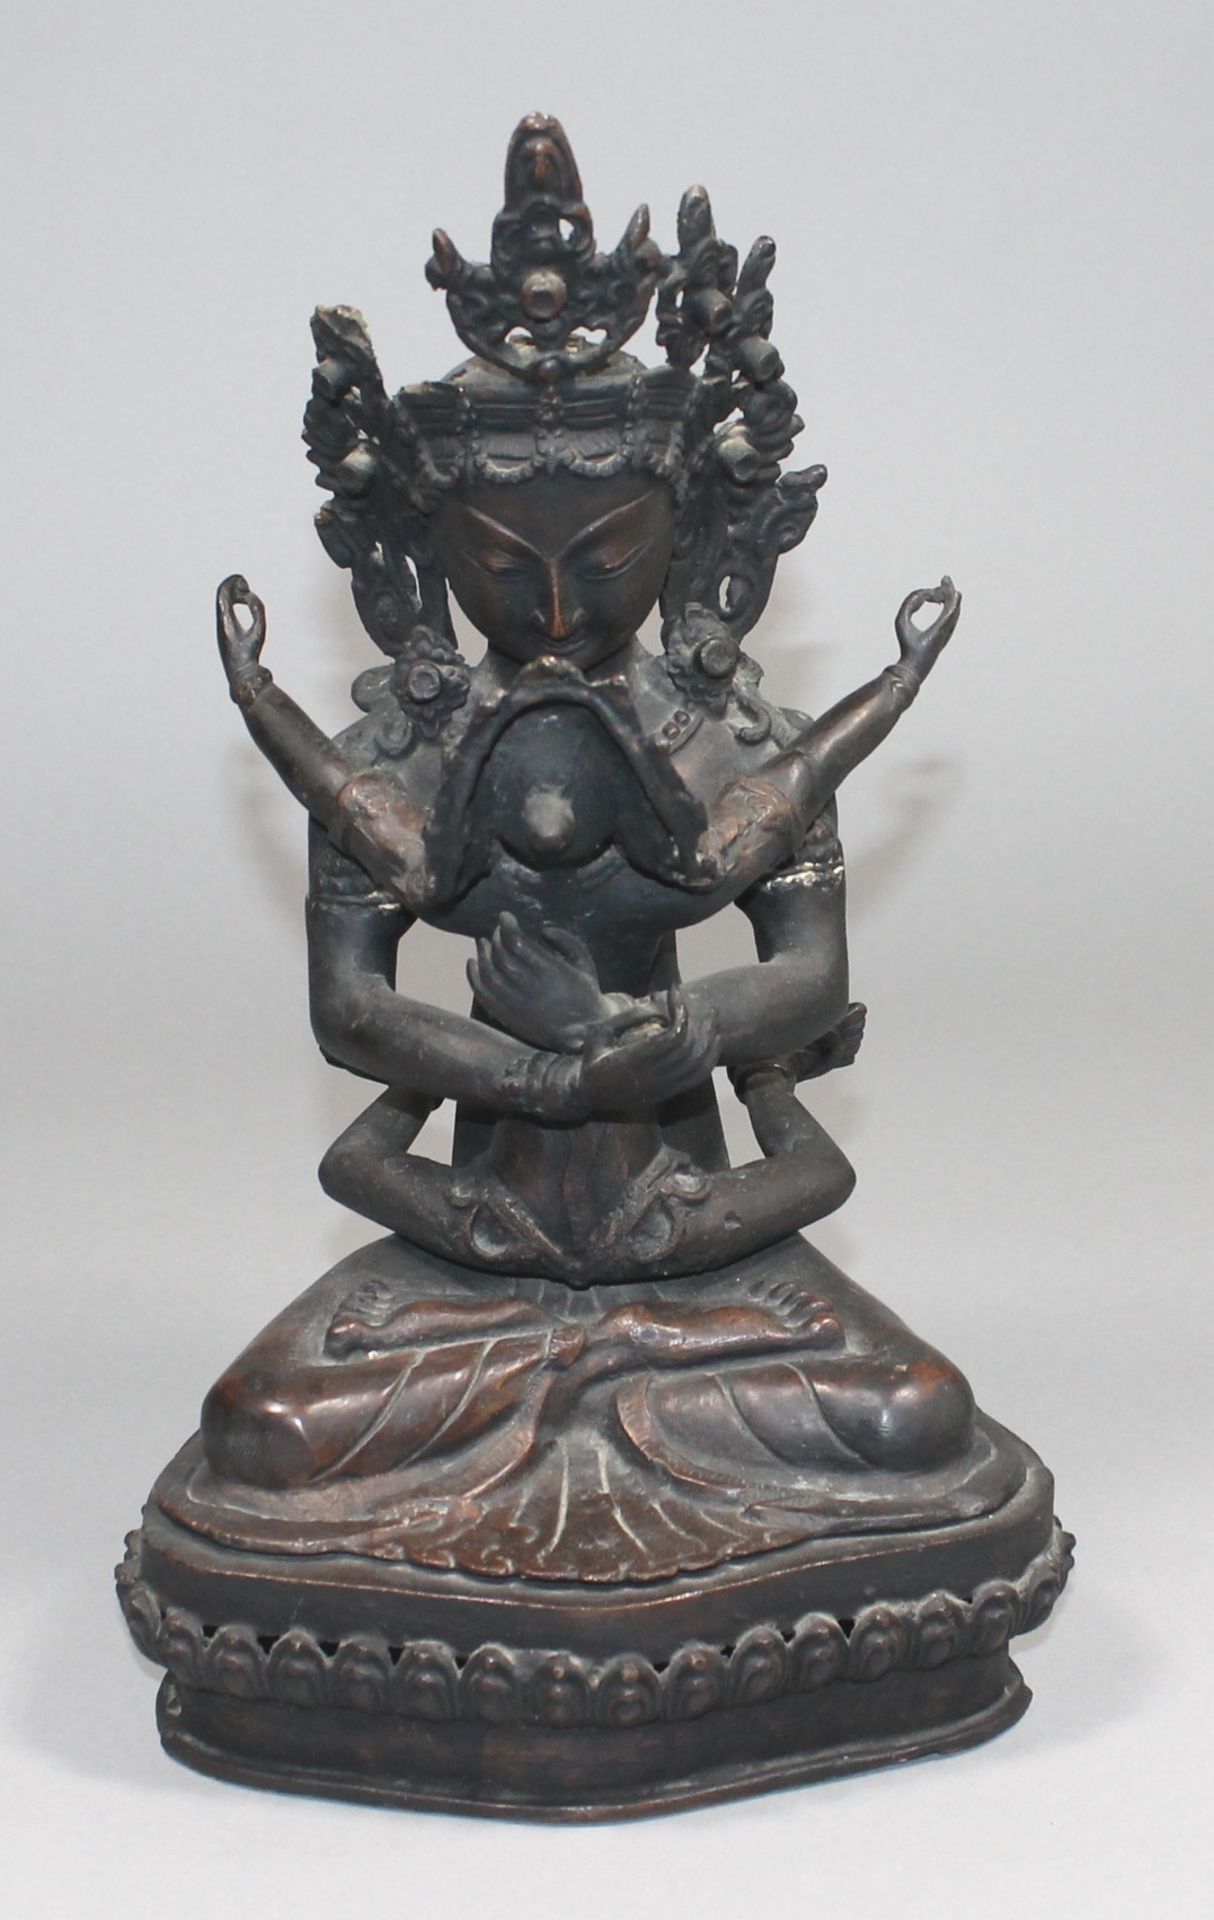 1 Skulptur Bronze "Vajrakilaya in Vereinigung", Asien, H ca. 36cm, Figur weist hinten Beschädigungen